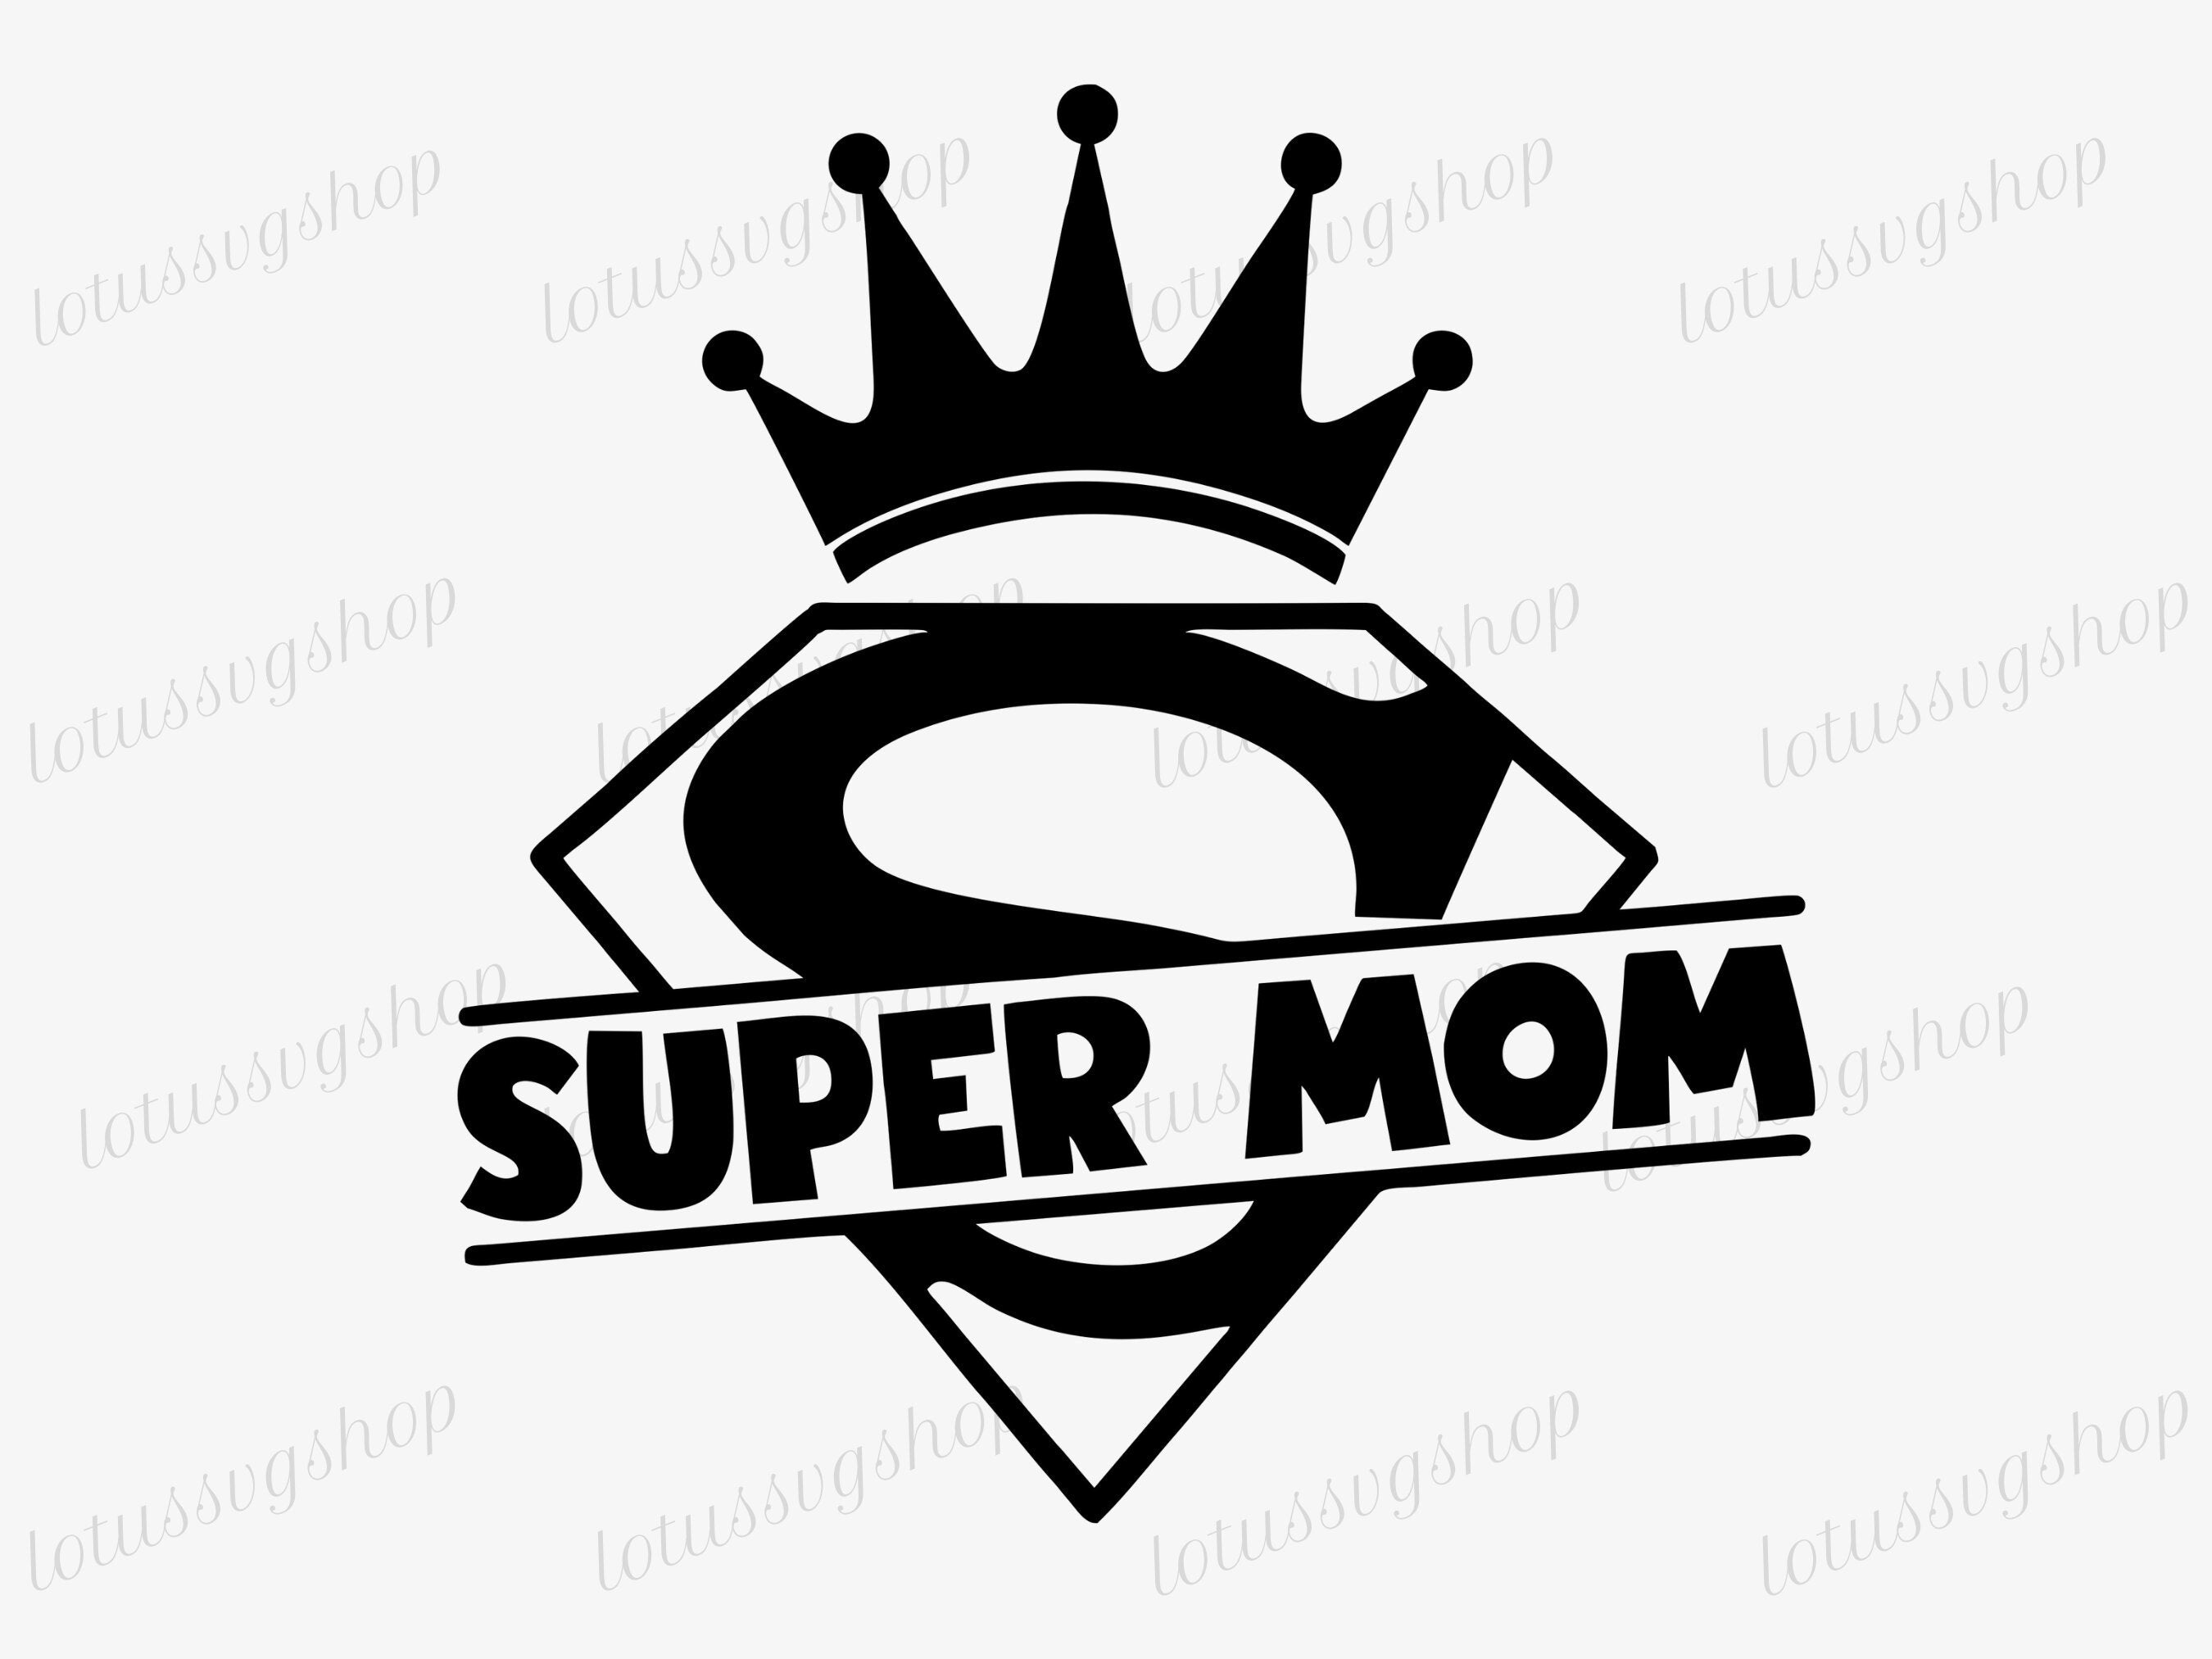 Mug Inox Super Mom – lemuginox